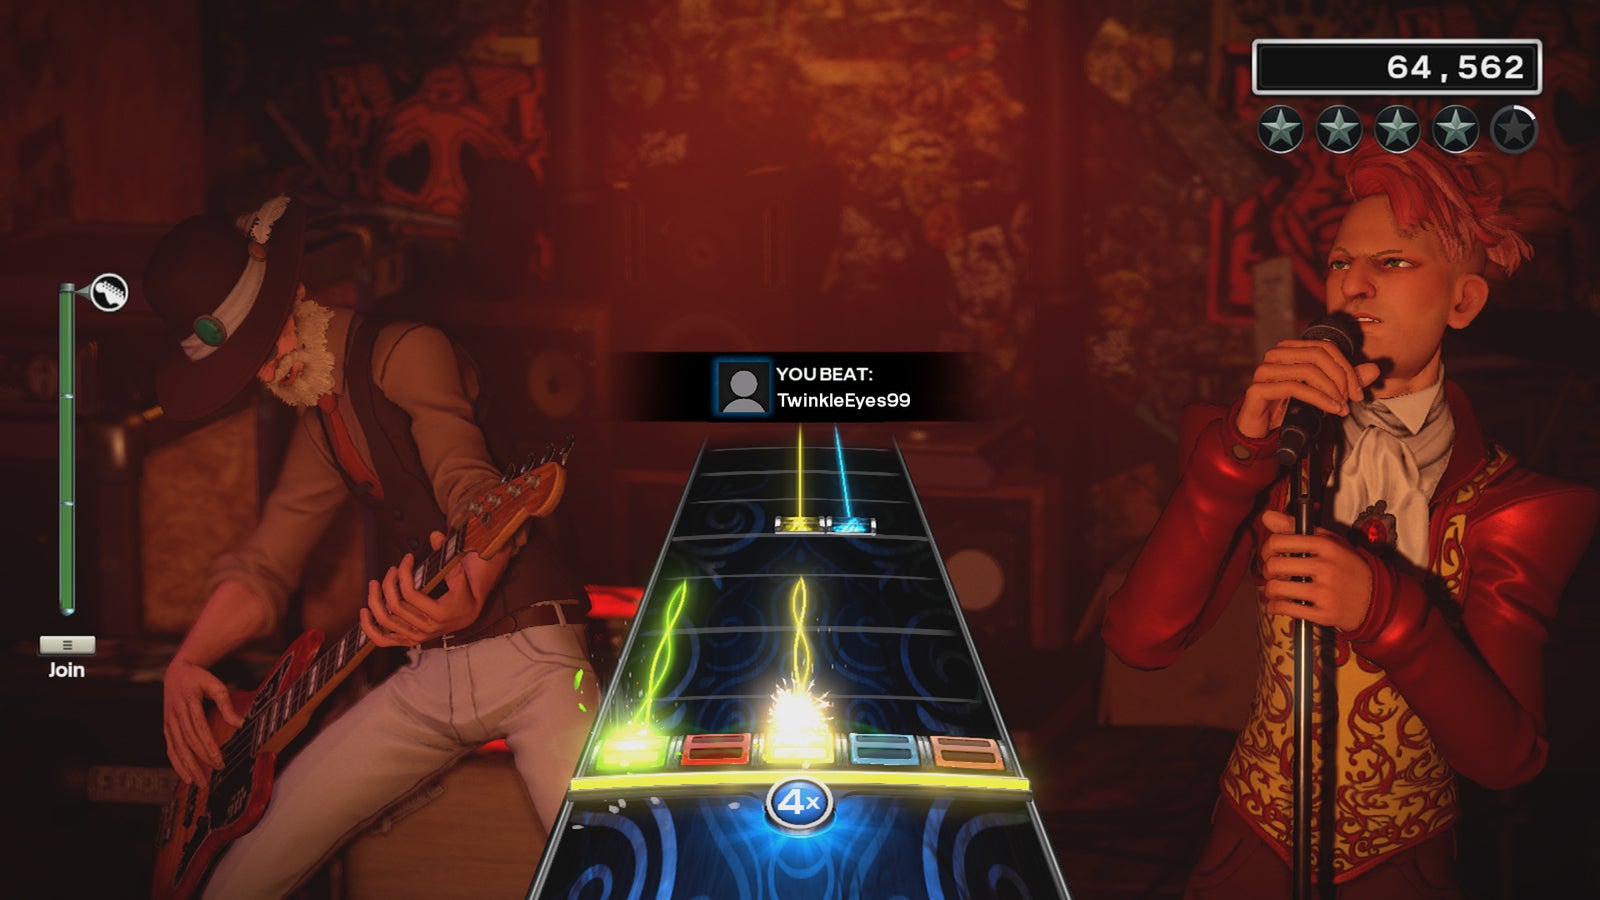 Obrazki dla Rock Band 4 na PC anulowane